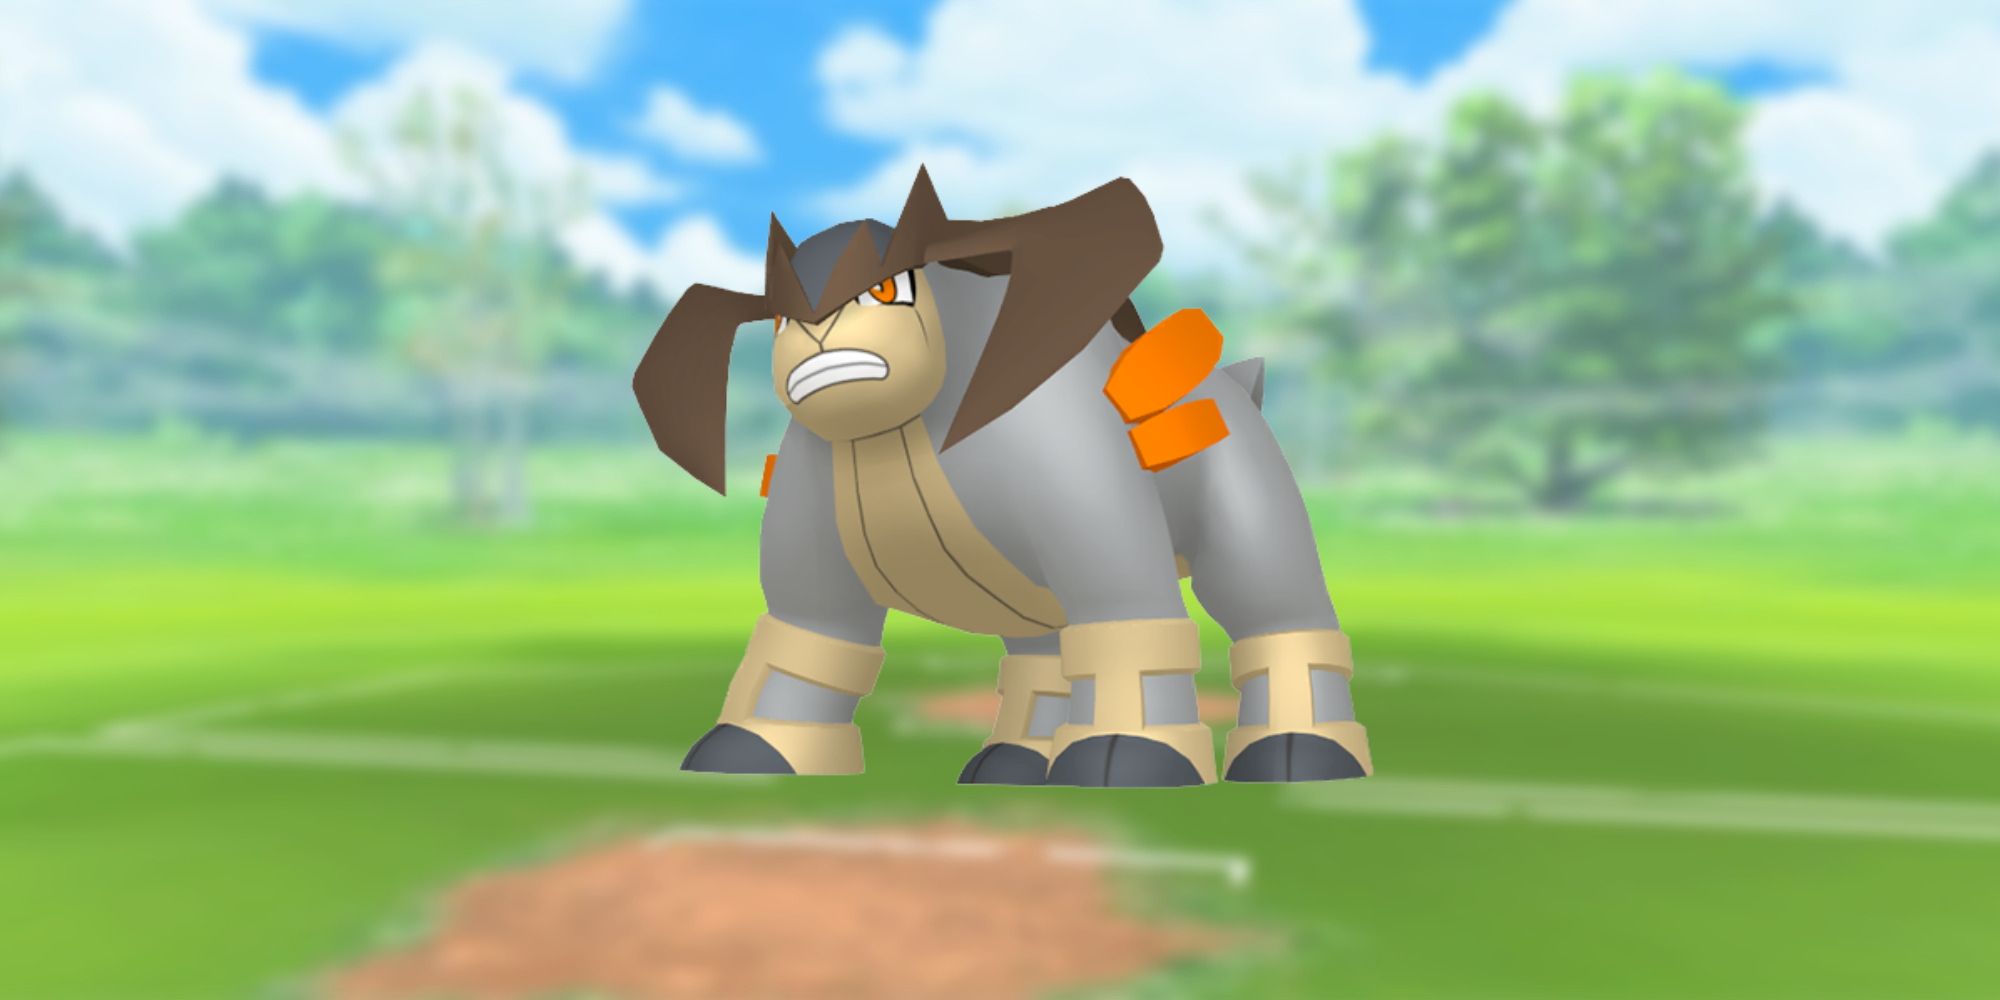 Terrakion from Pokemon with the Pokemon Go battlefield as the background